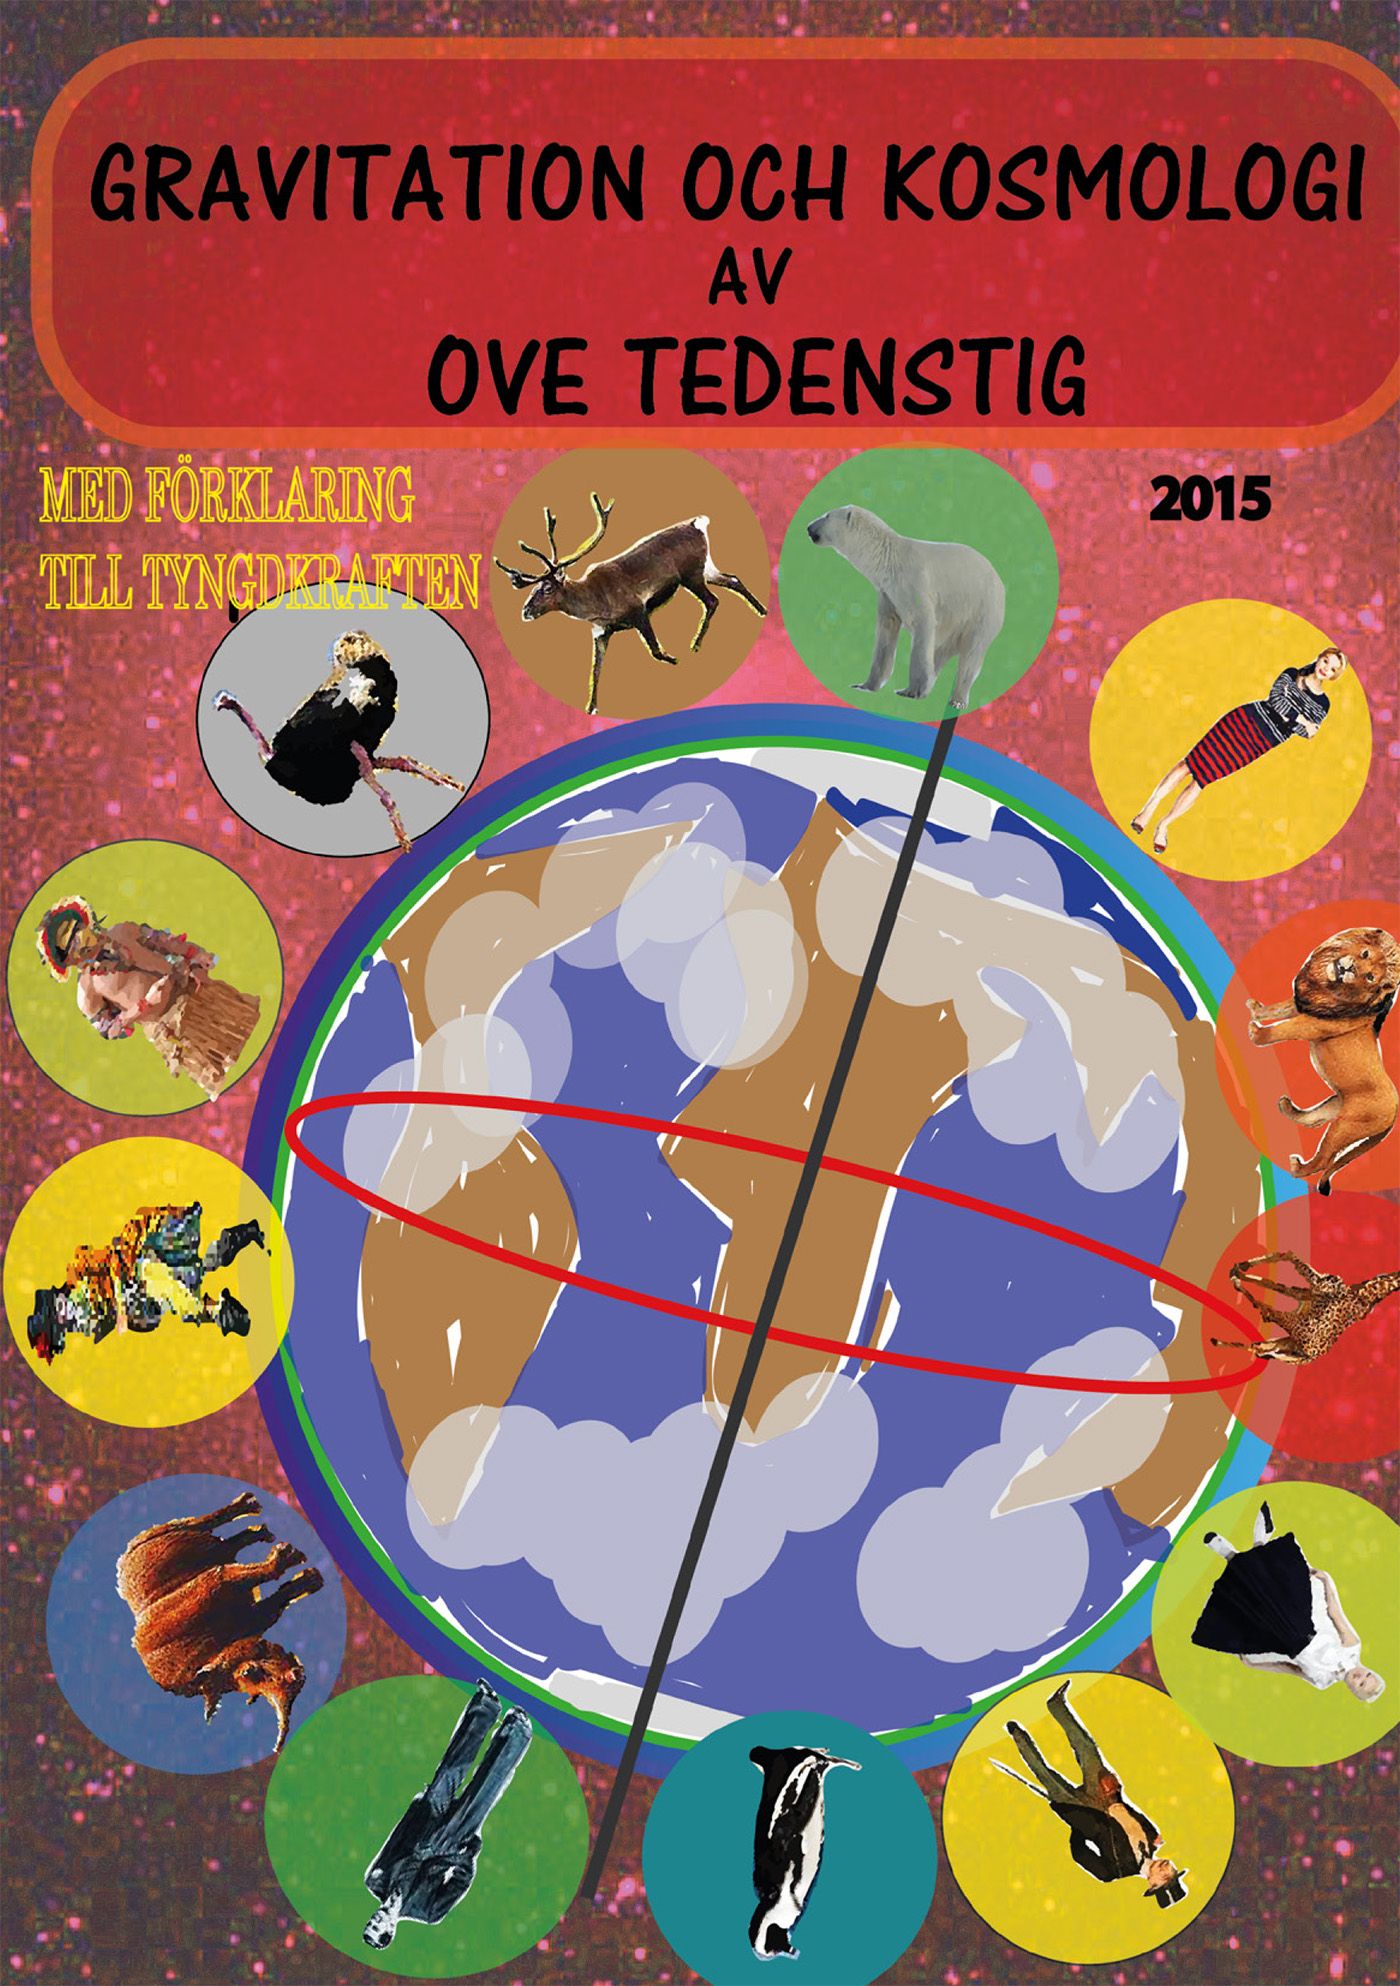 Gravitation och kosmologi 2015 edition 1, e-bog af Ove Tedenstig